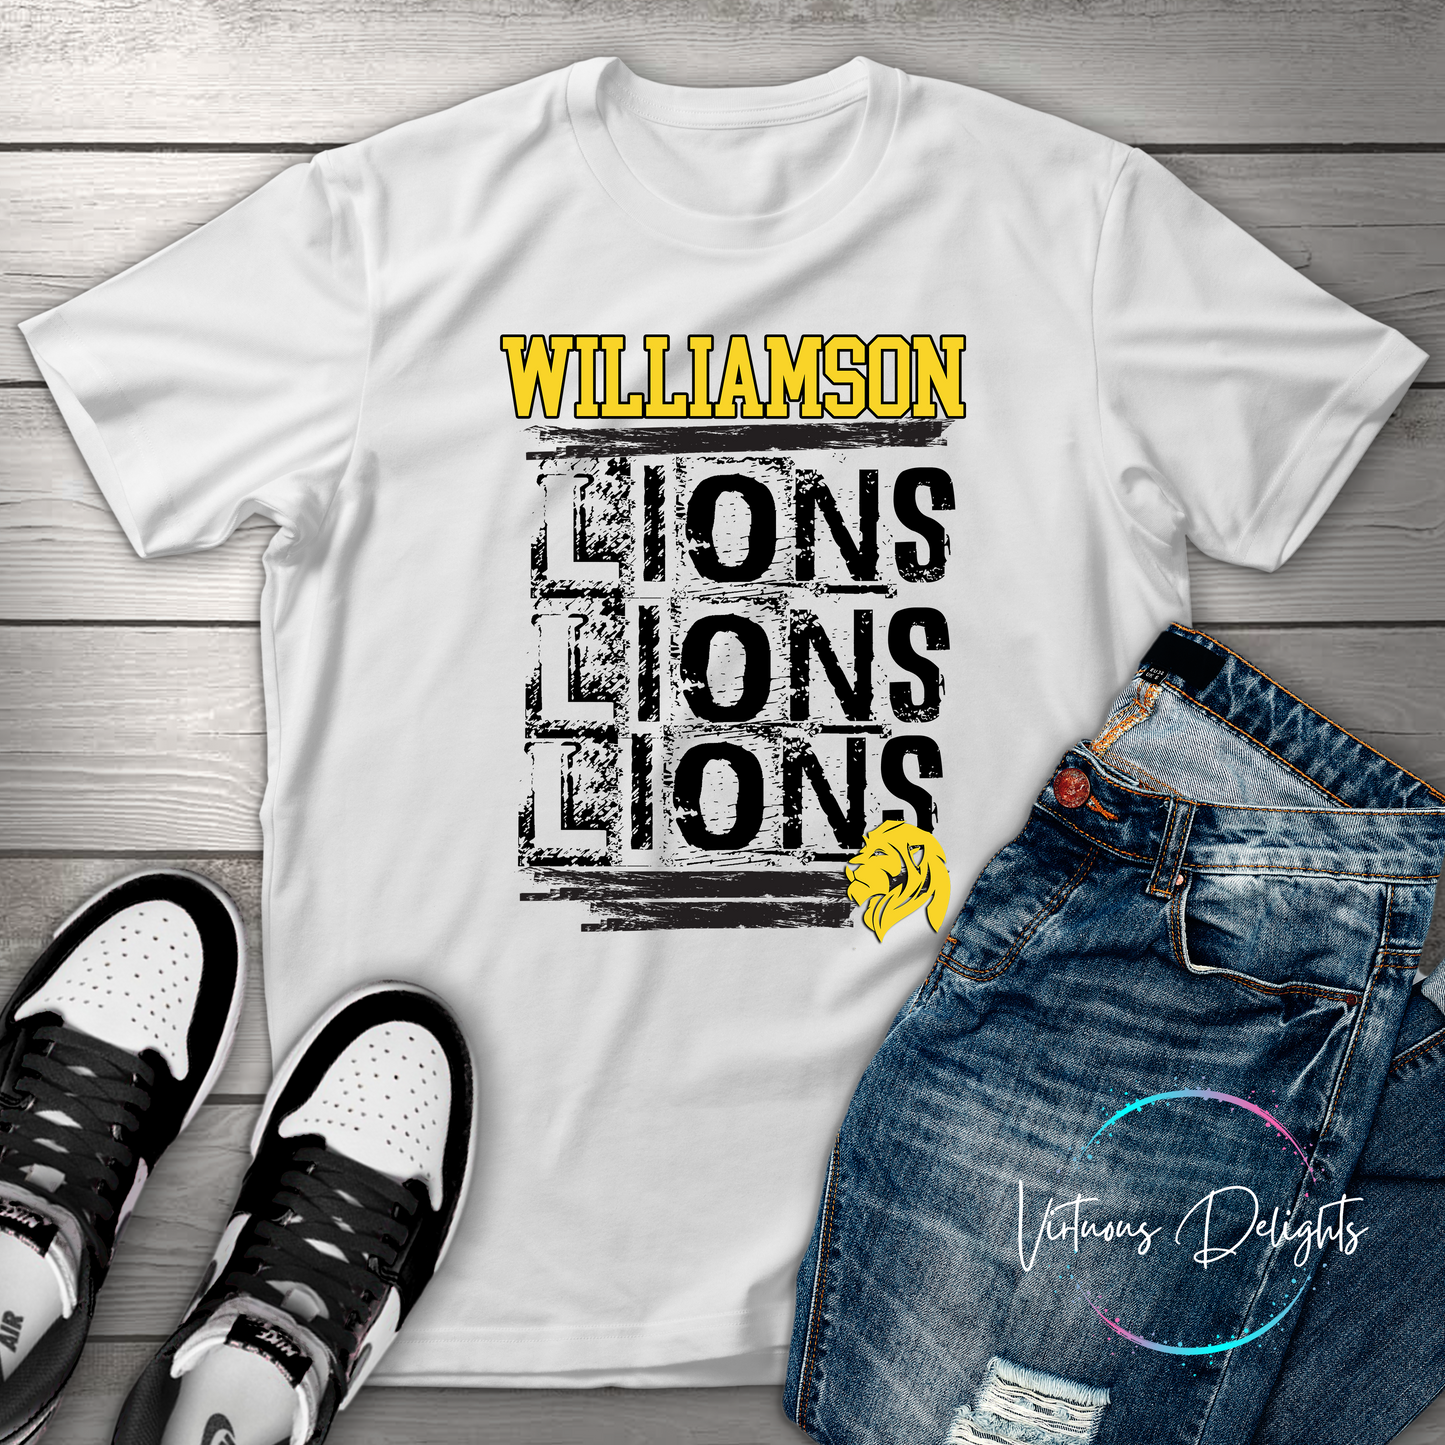 Lions High-school T-Shirt